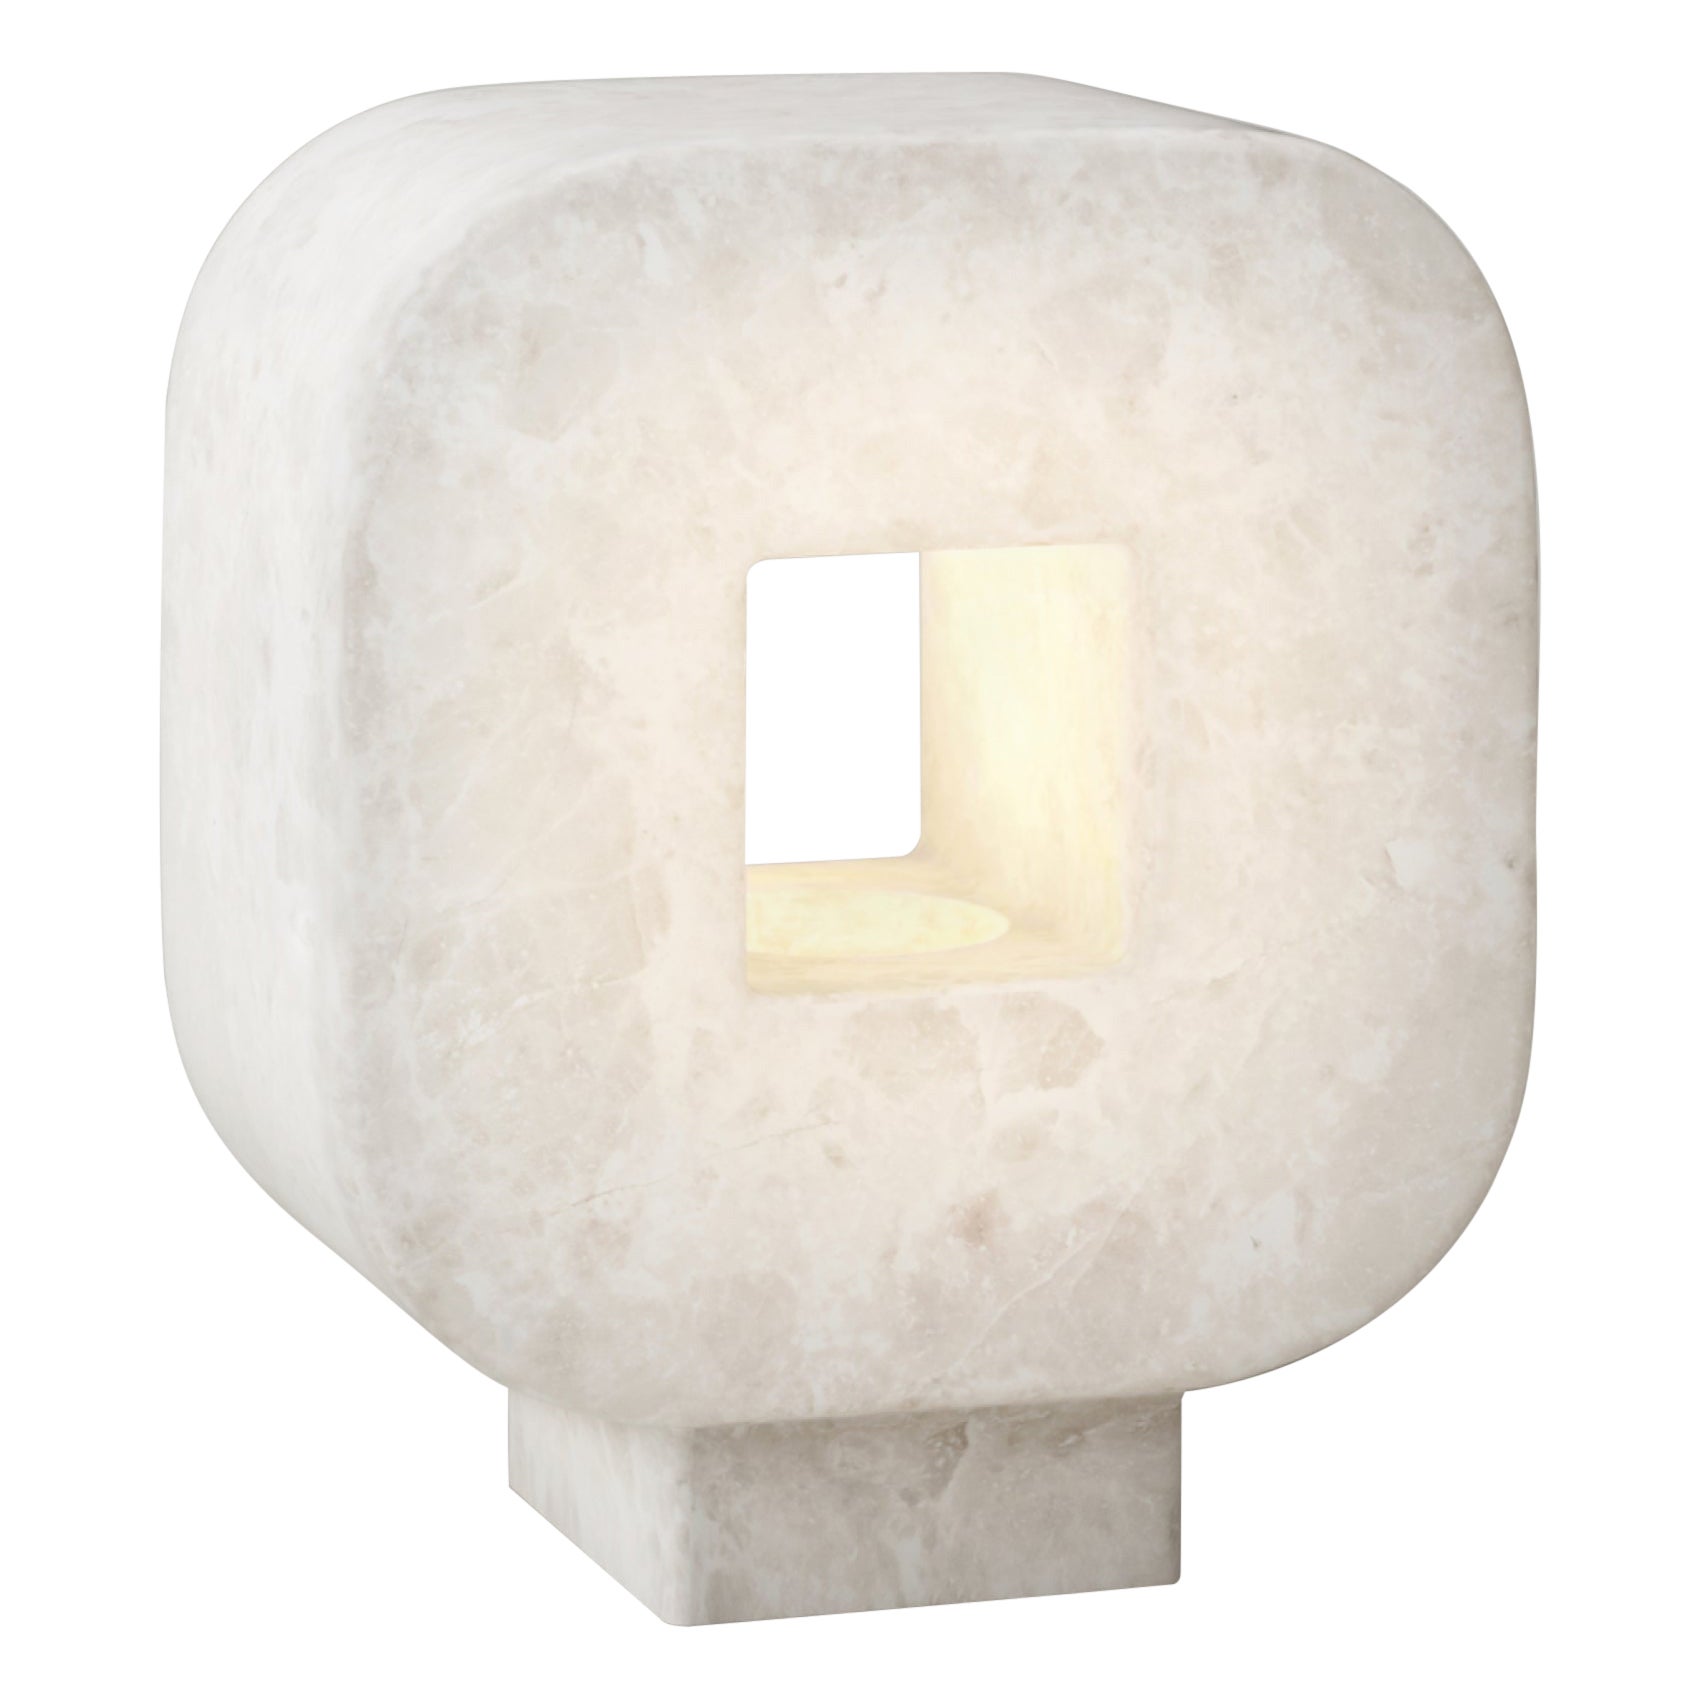 M_004 Floor Lamp by Monolith Studio, Onyx For Sale